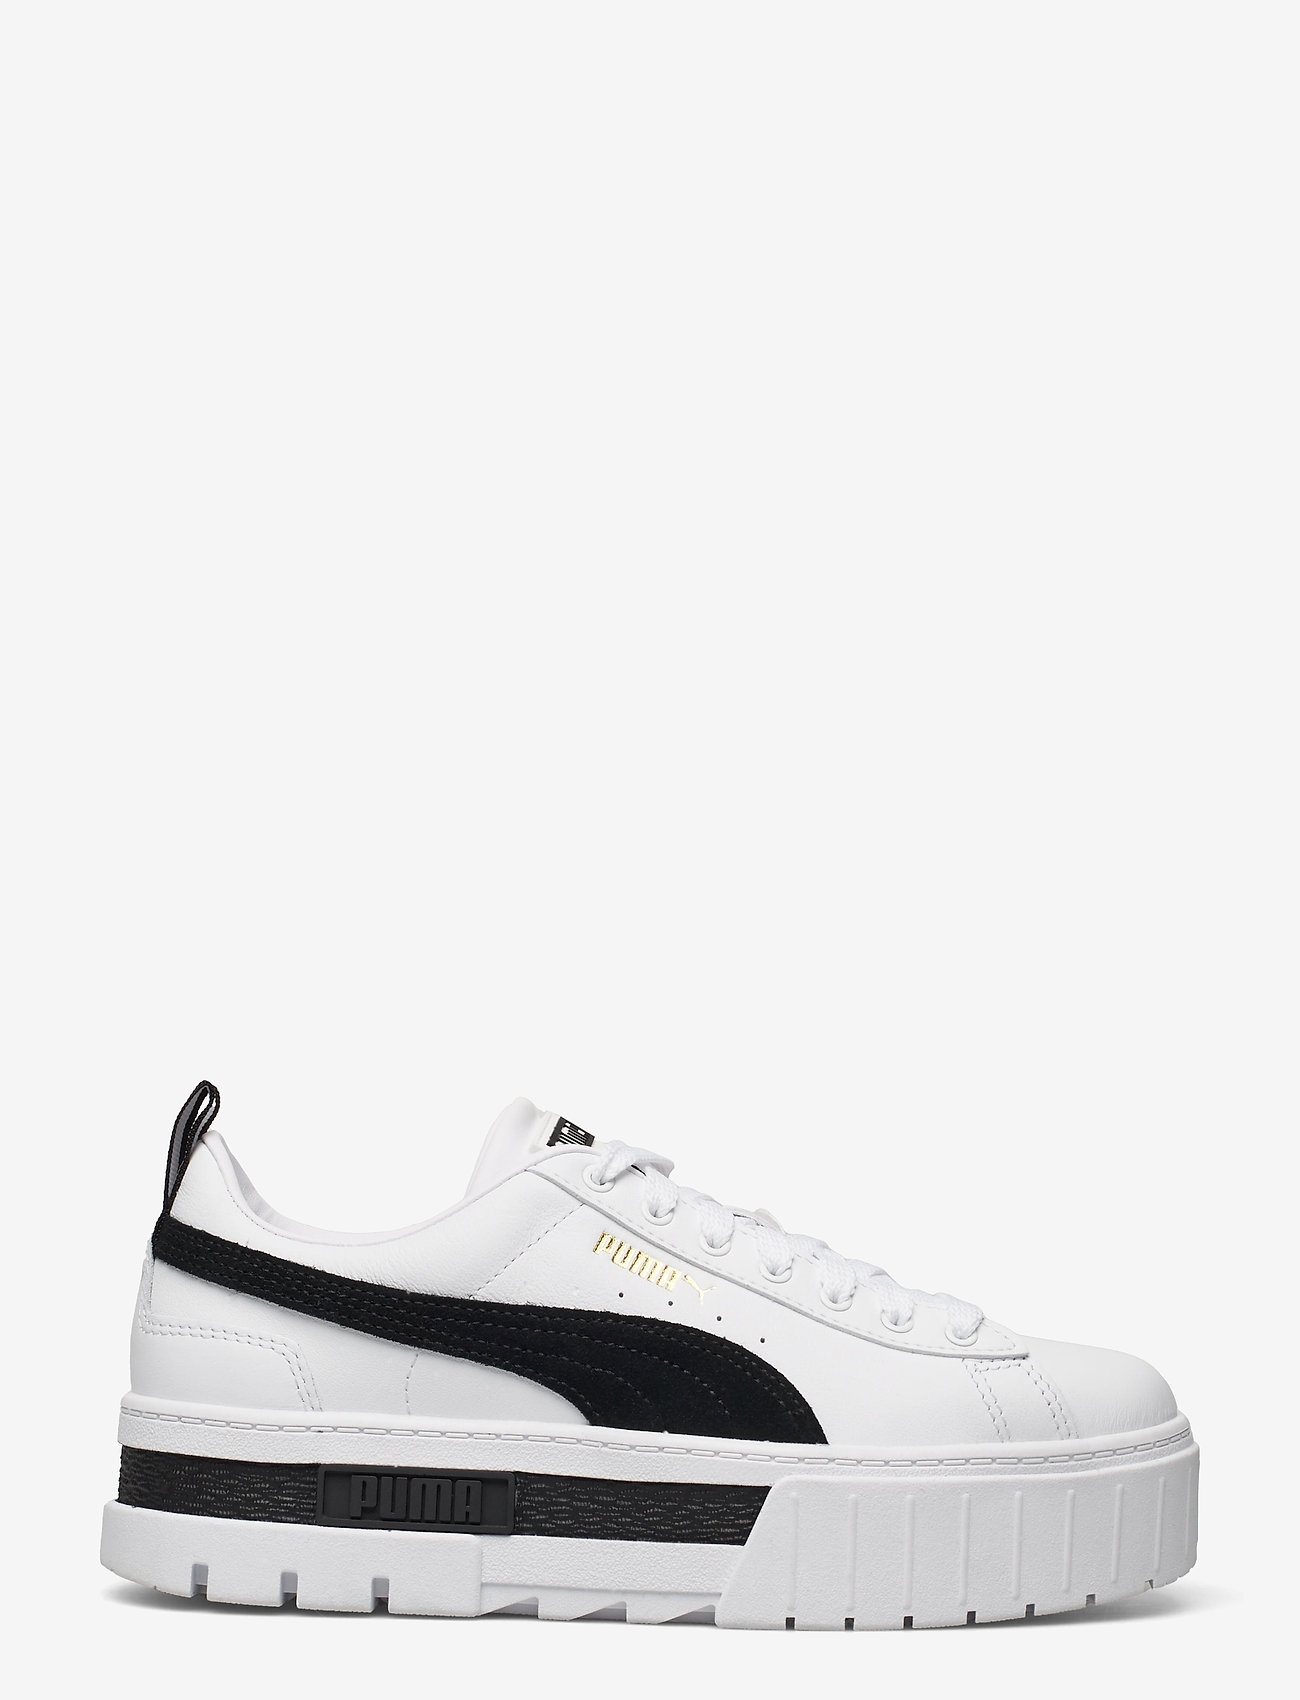 PUMA - Mayze Lth Wn s - chunky sneakers - puma white-puma black - 1